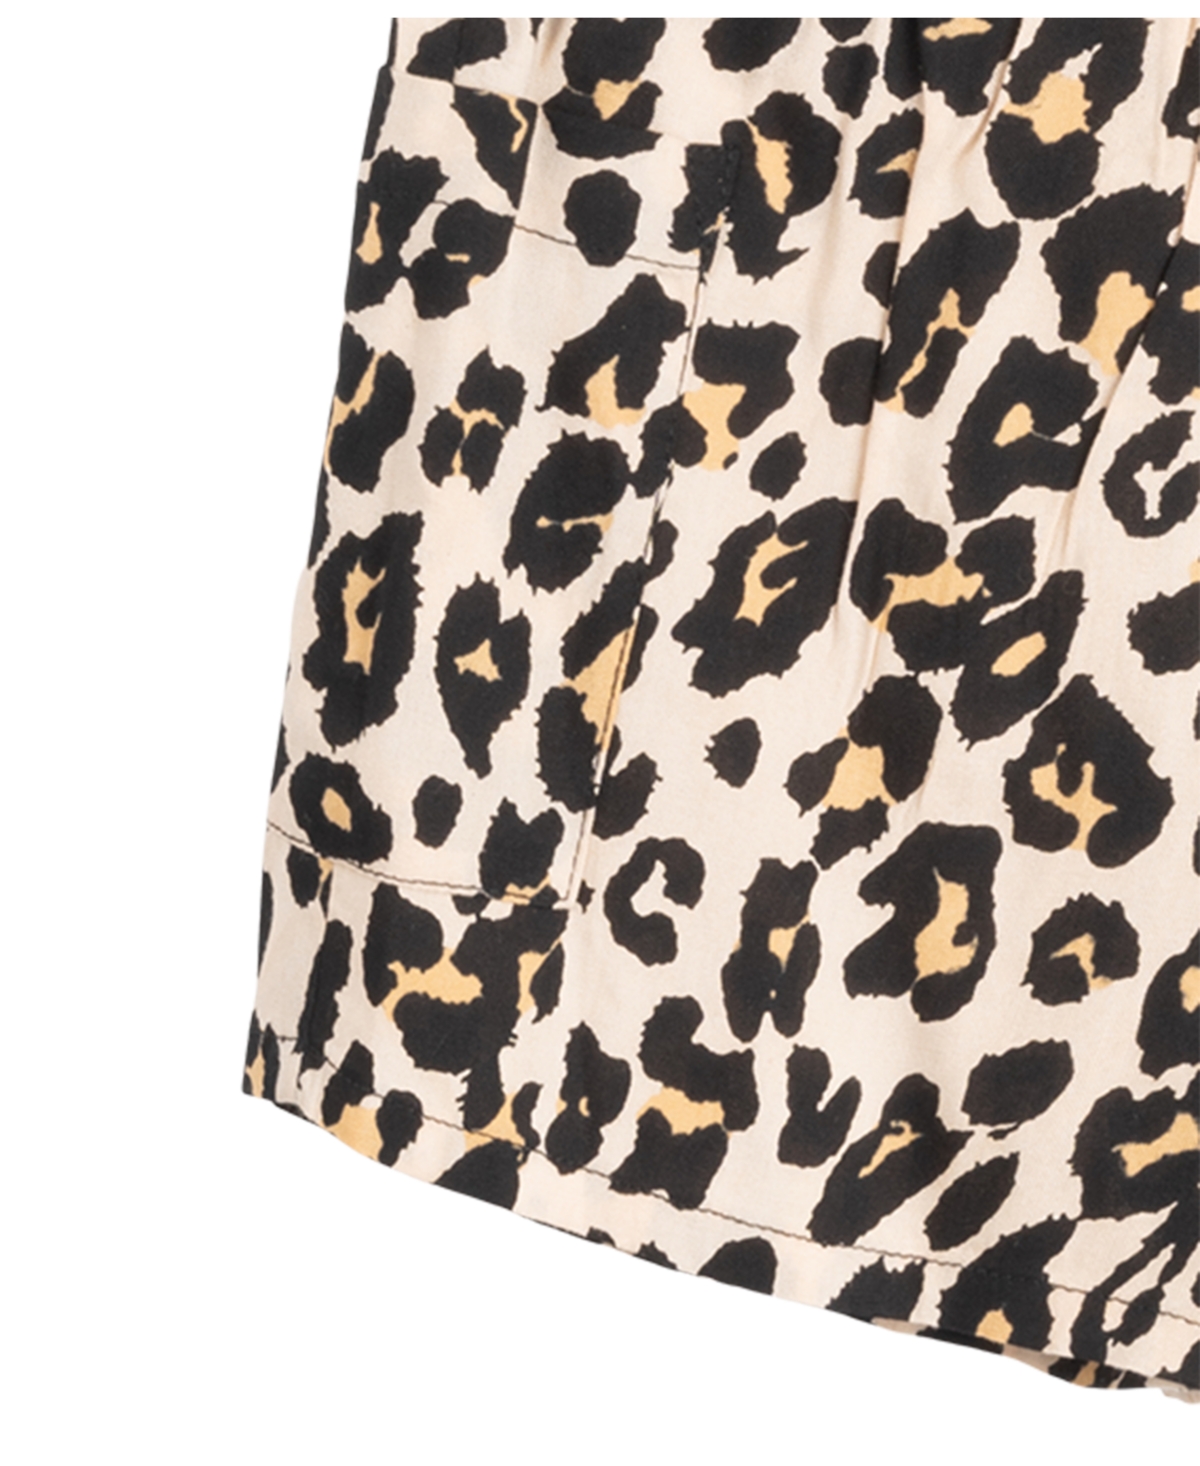 Shop Rare Editions Baby Girl Cheetah Short Set In Black